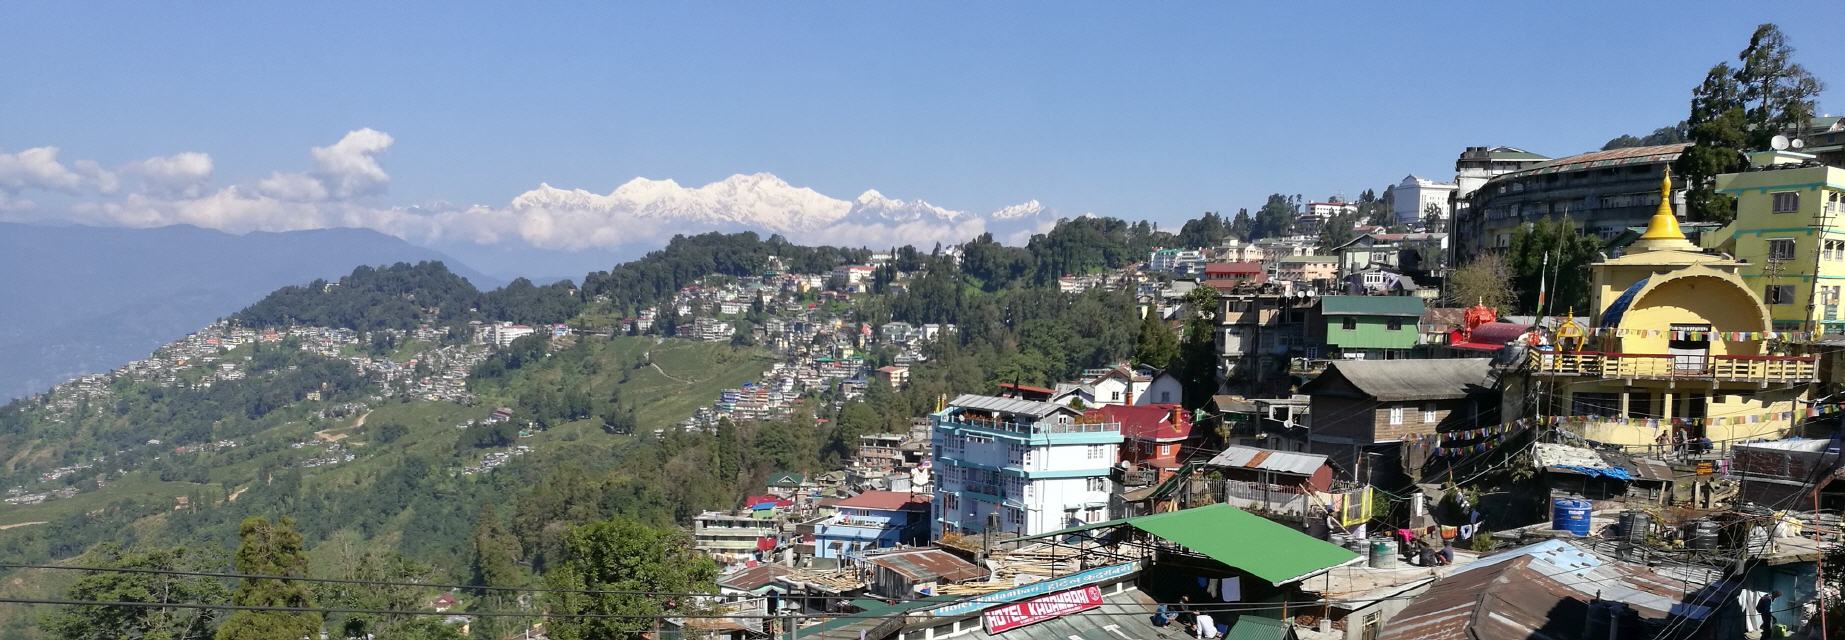 Darjeeling im Himalaya